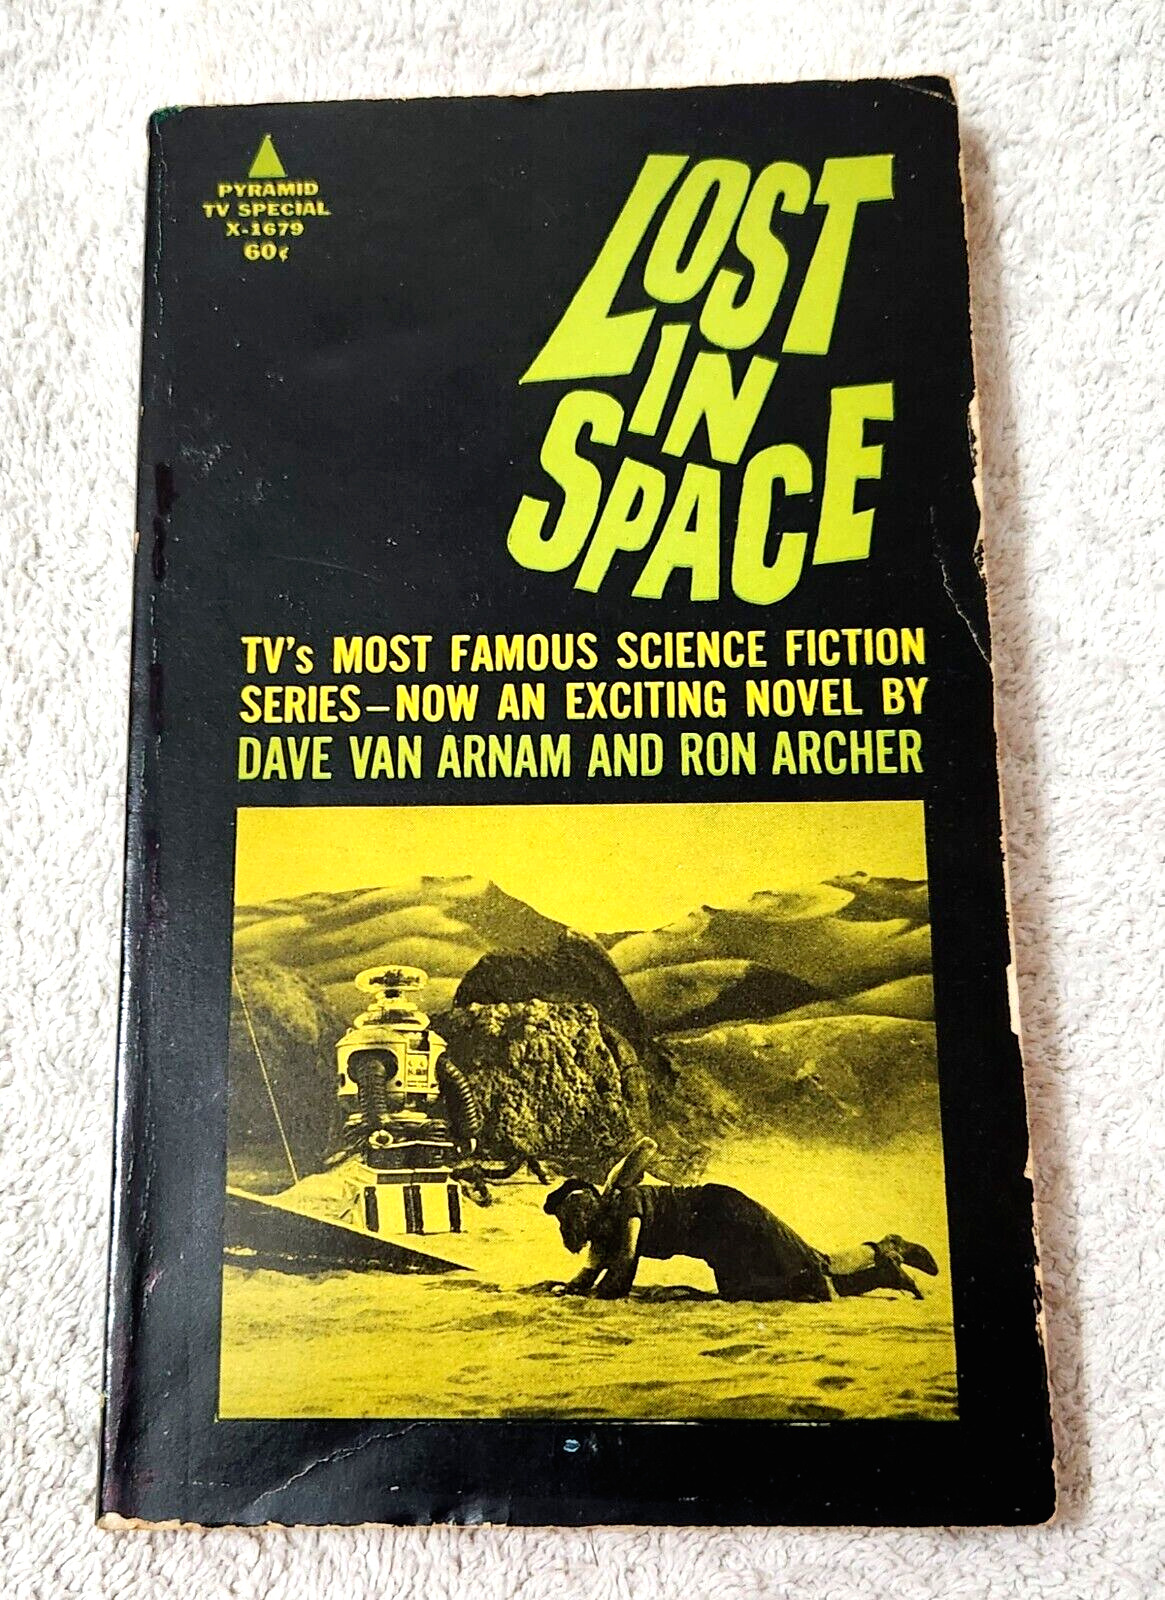 LOST IN SPACE TV Tie-In Paperback (1967)